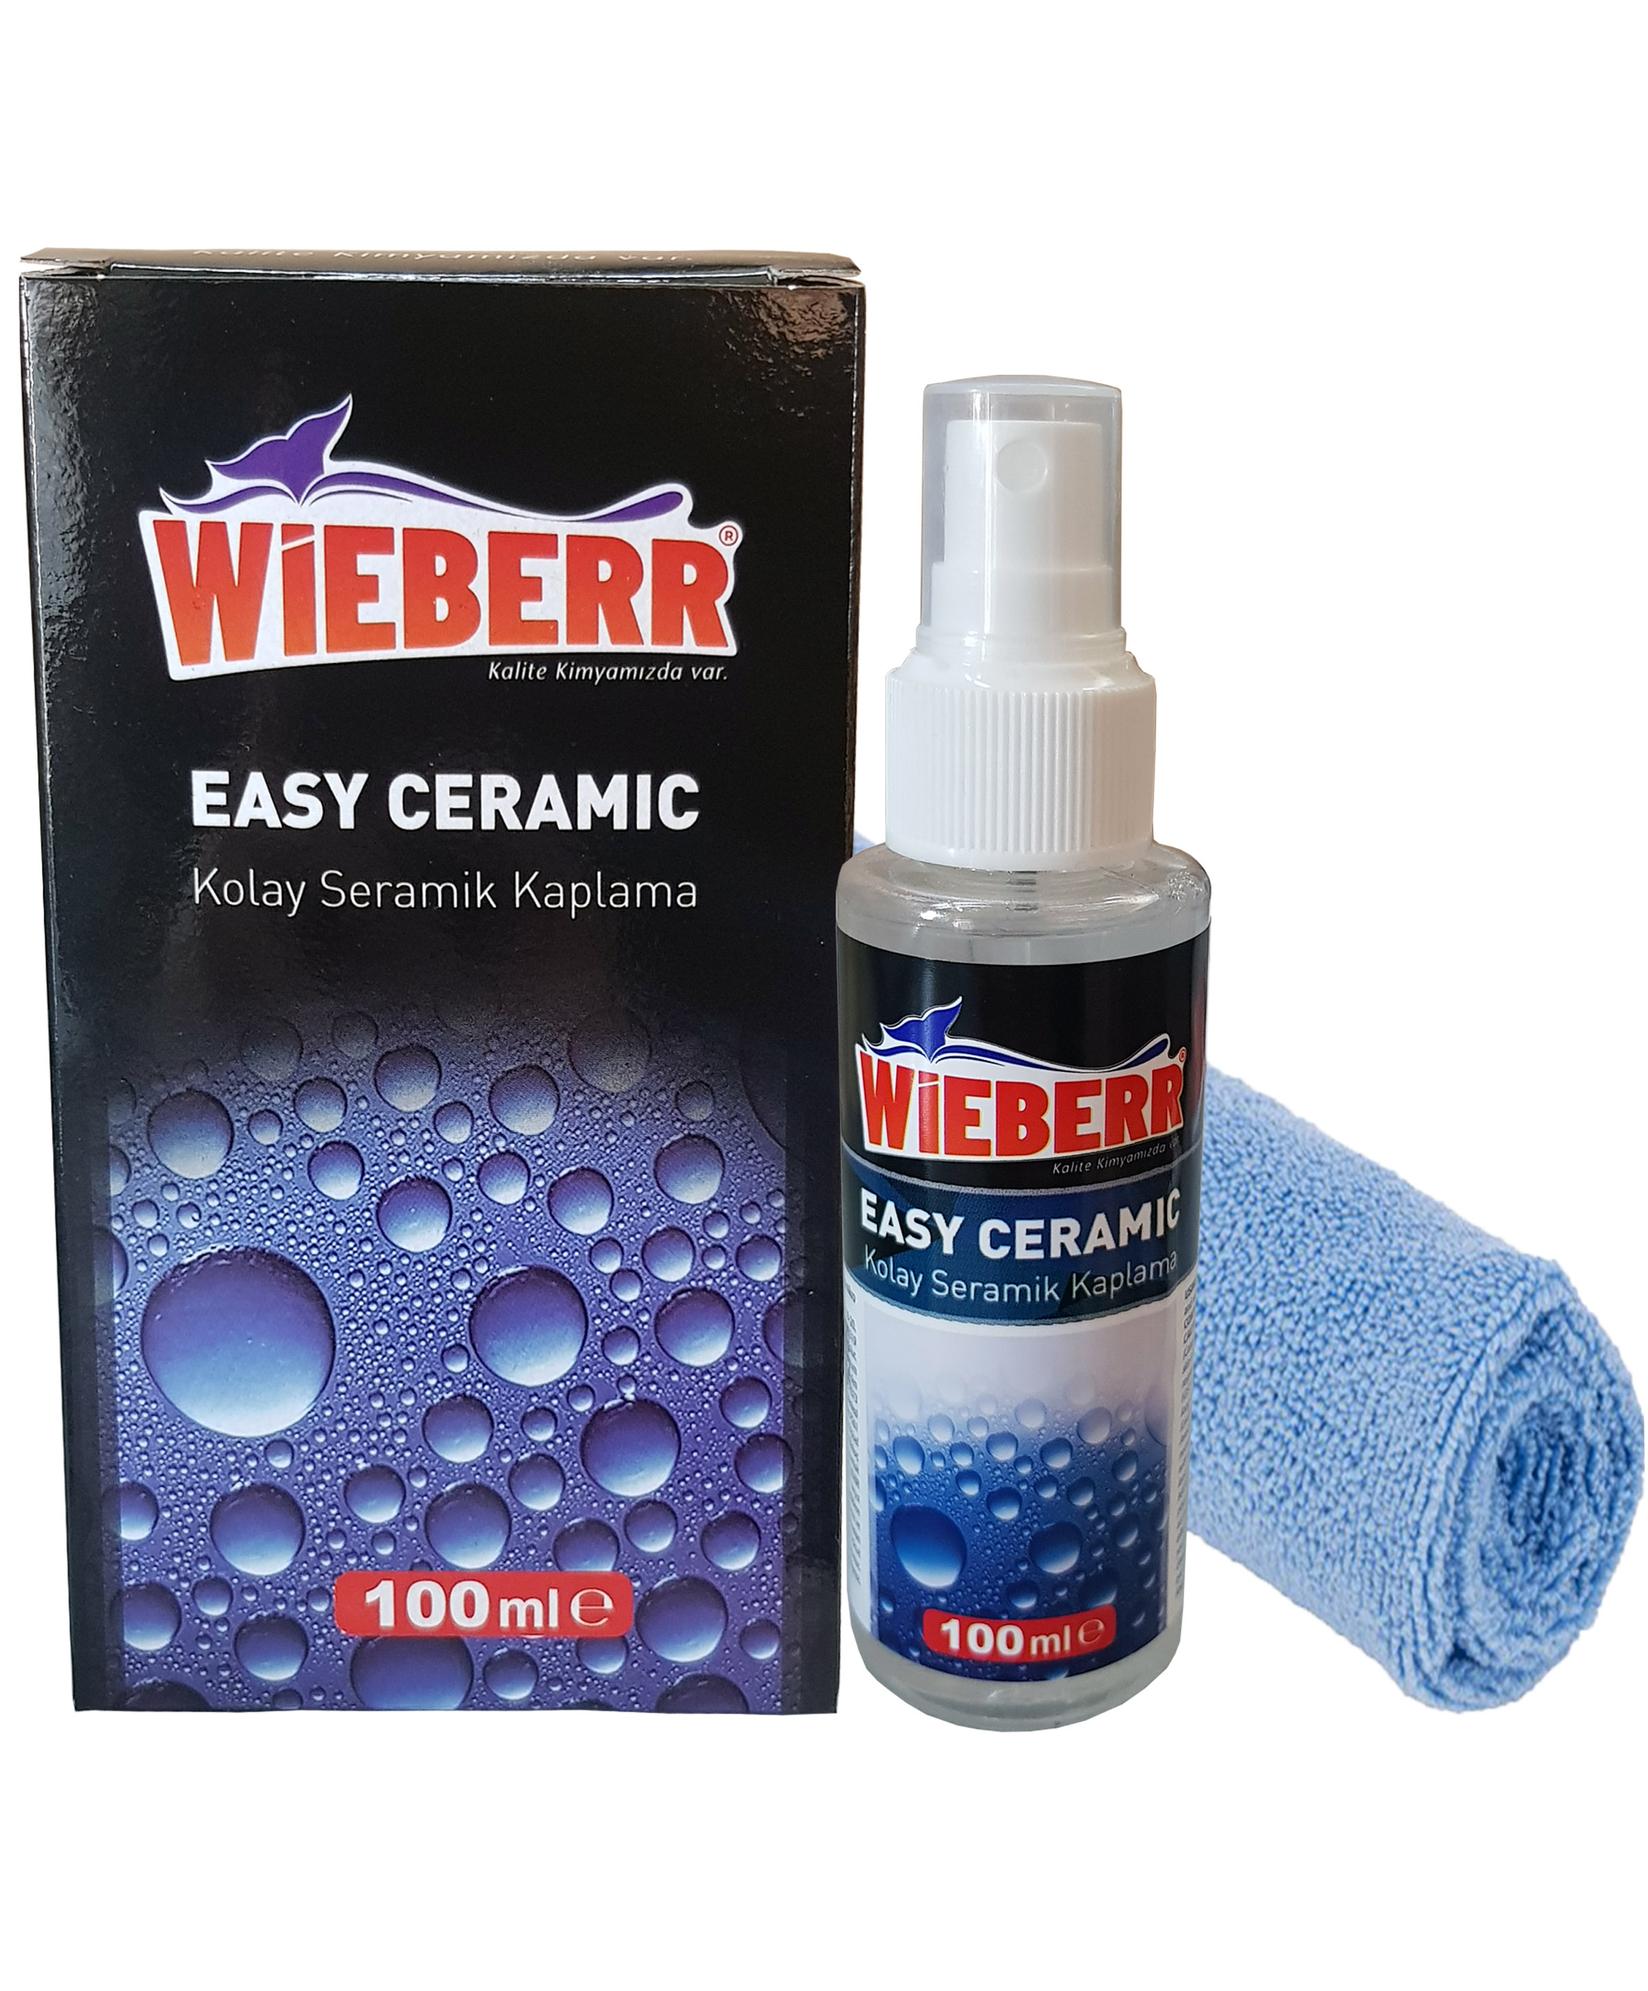 Wieberr Easy Ceramic Sredstvo za zaštitu spoljašnosti automobila, 100ml